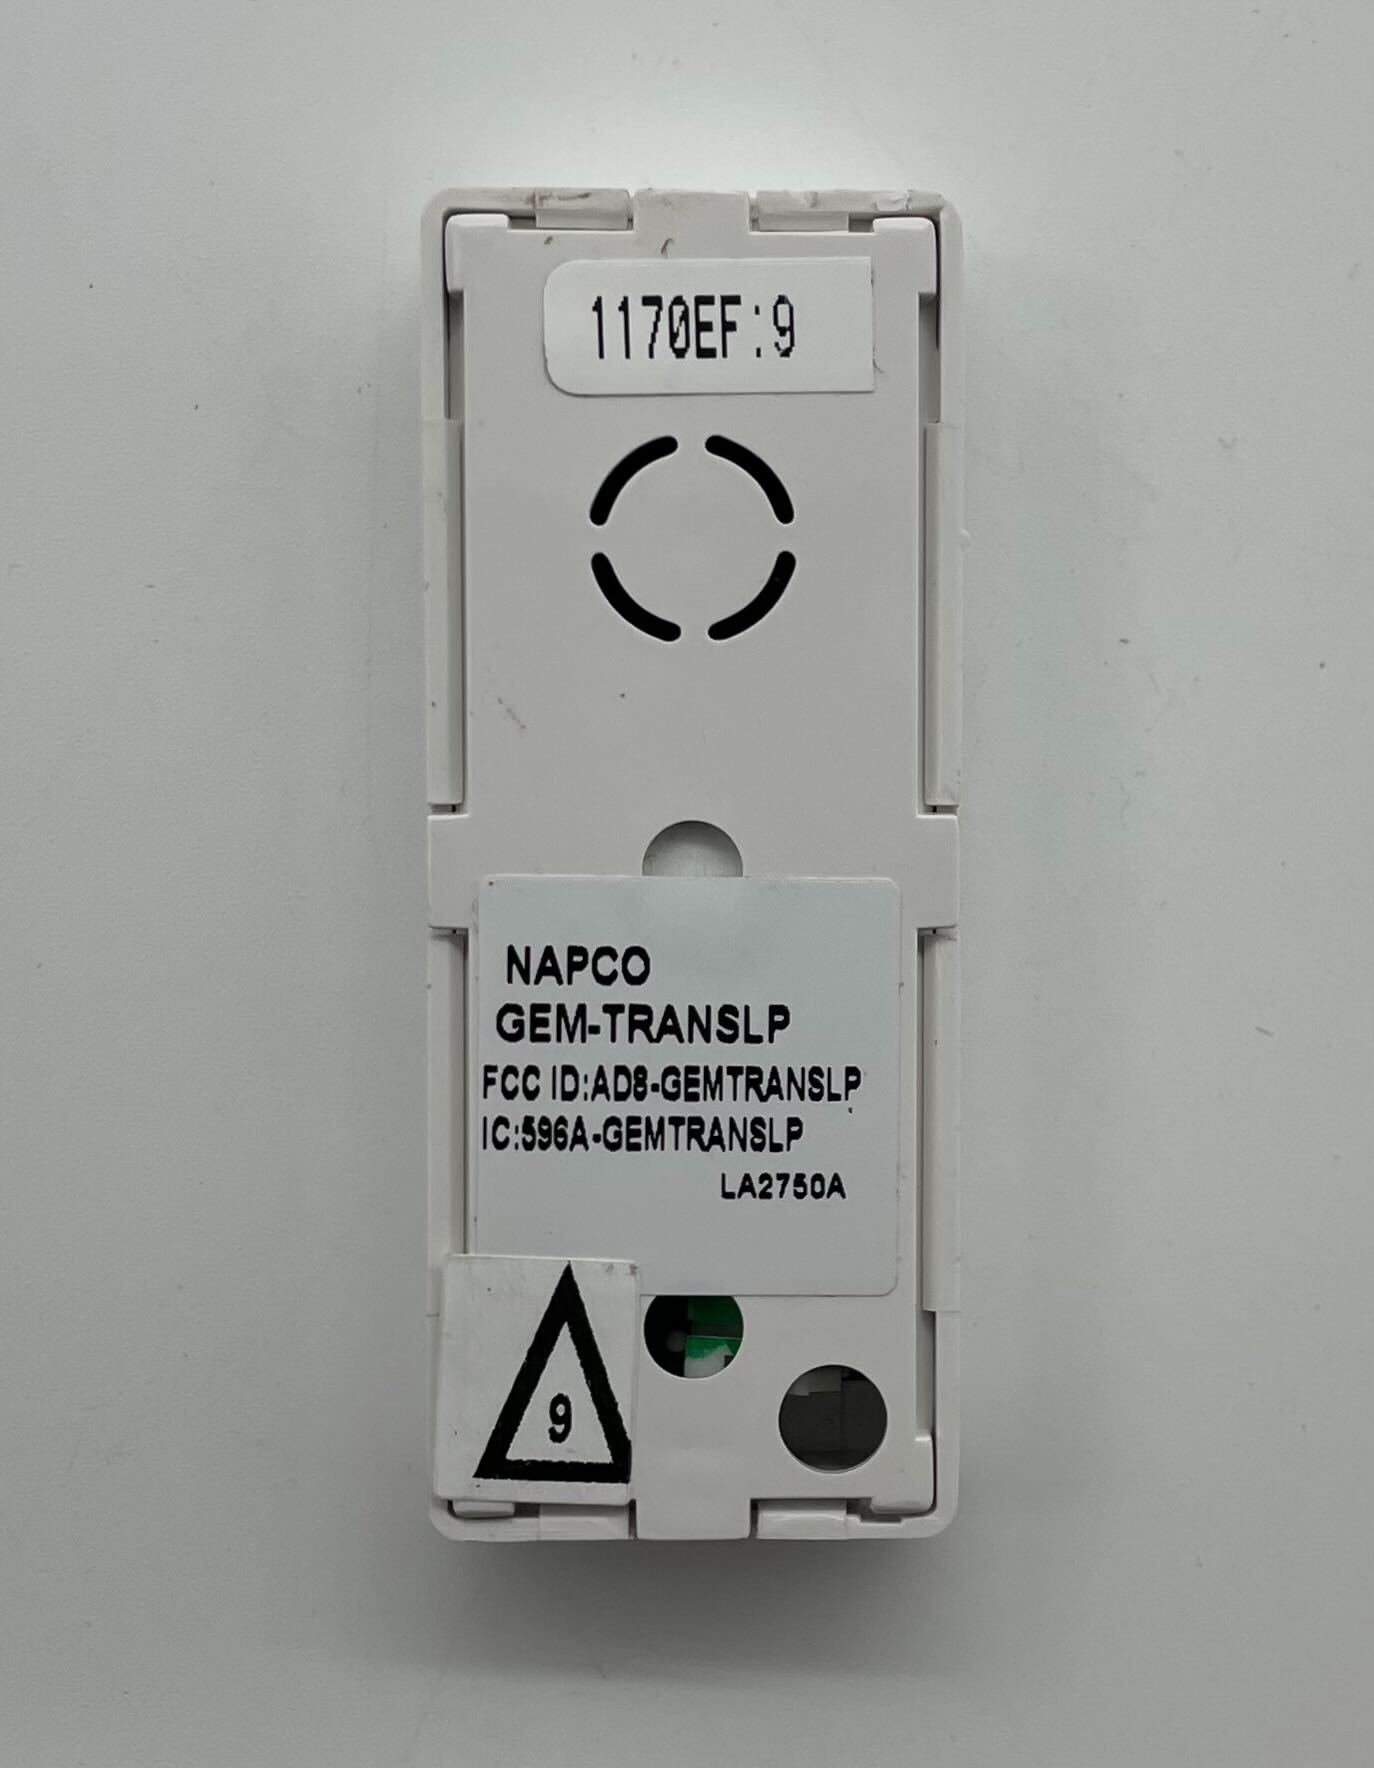 Napco GEM-TRANSLP - The Fire Alarm Supplier